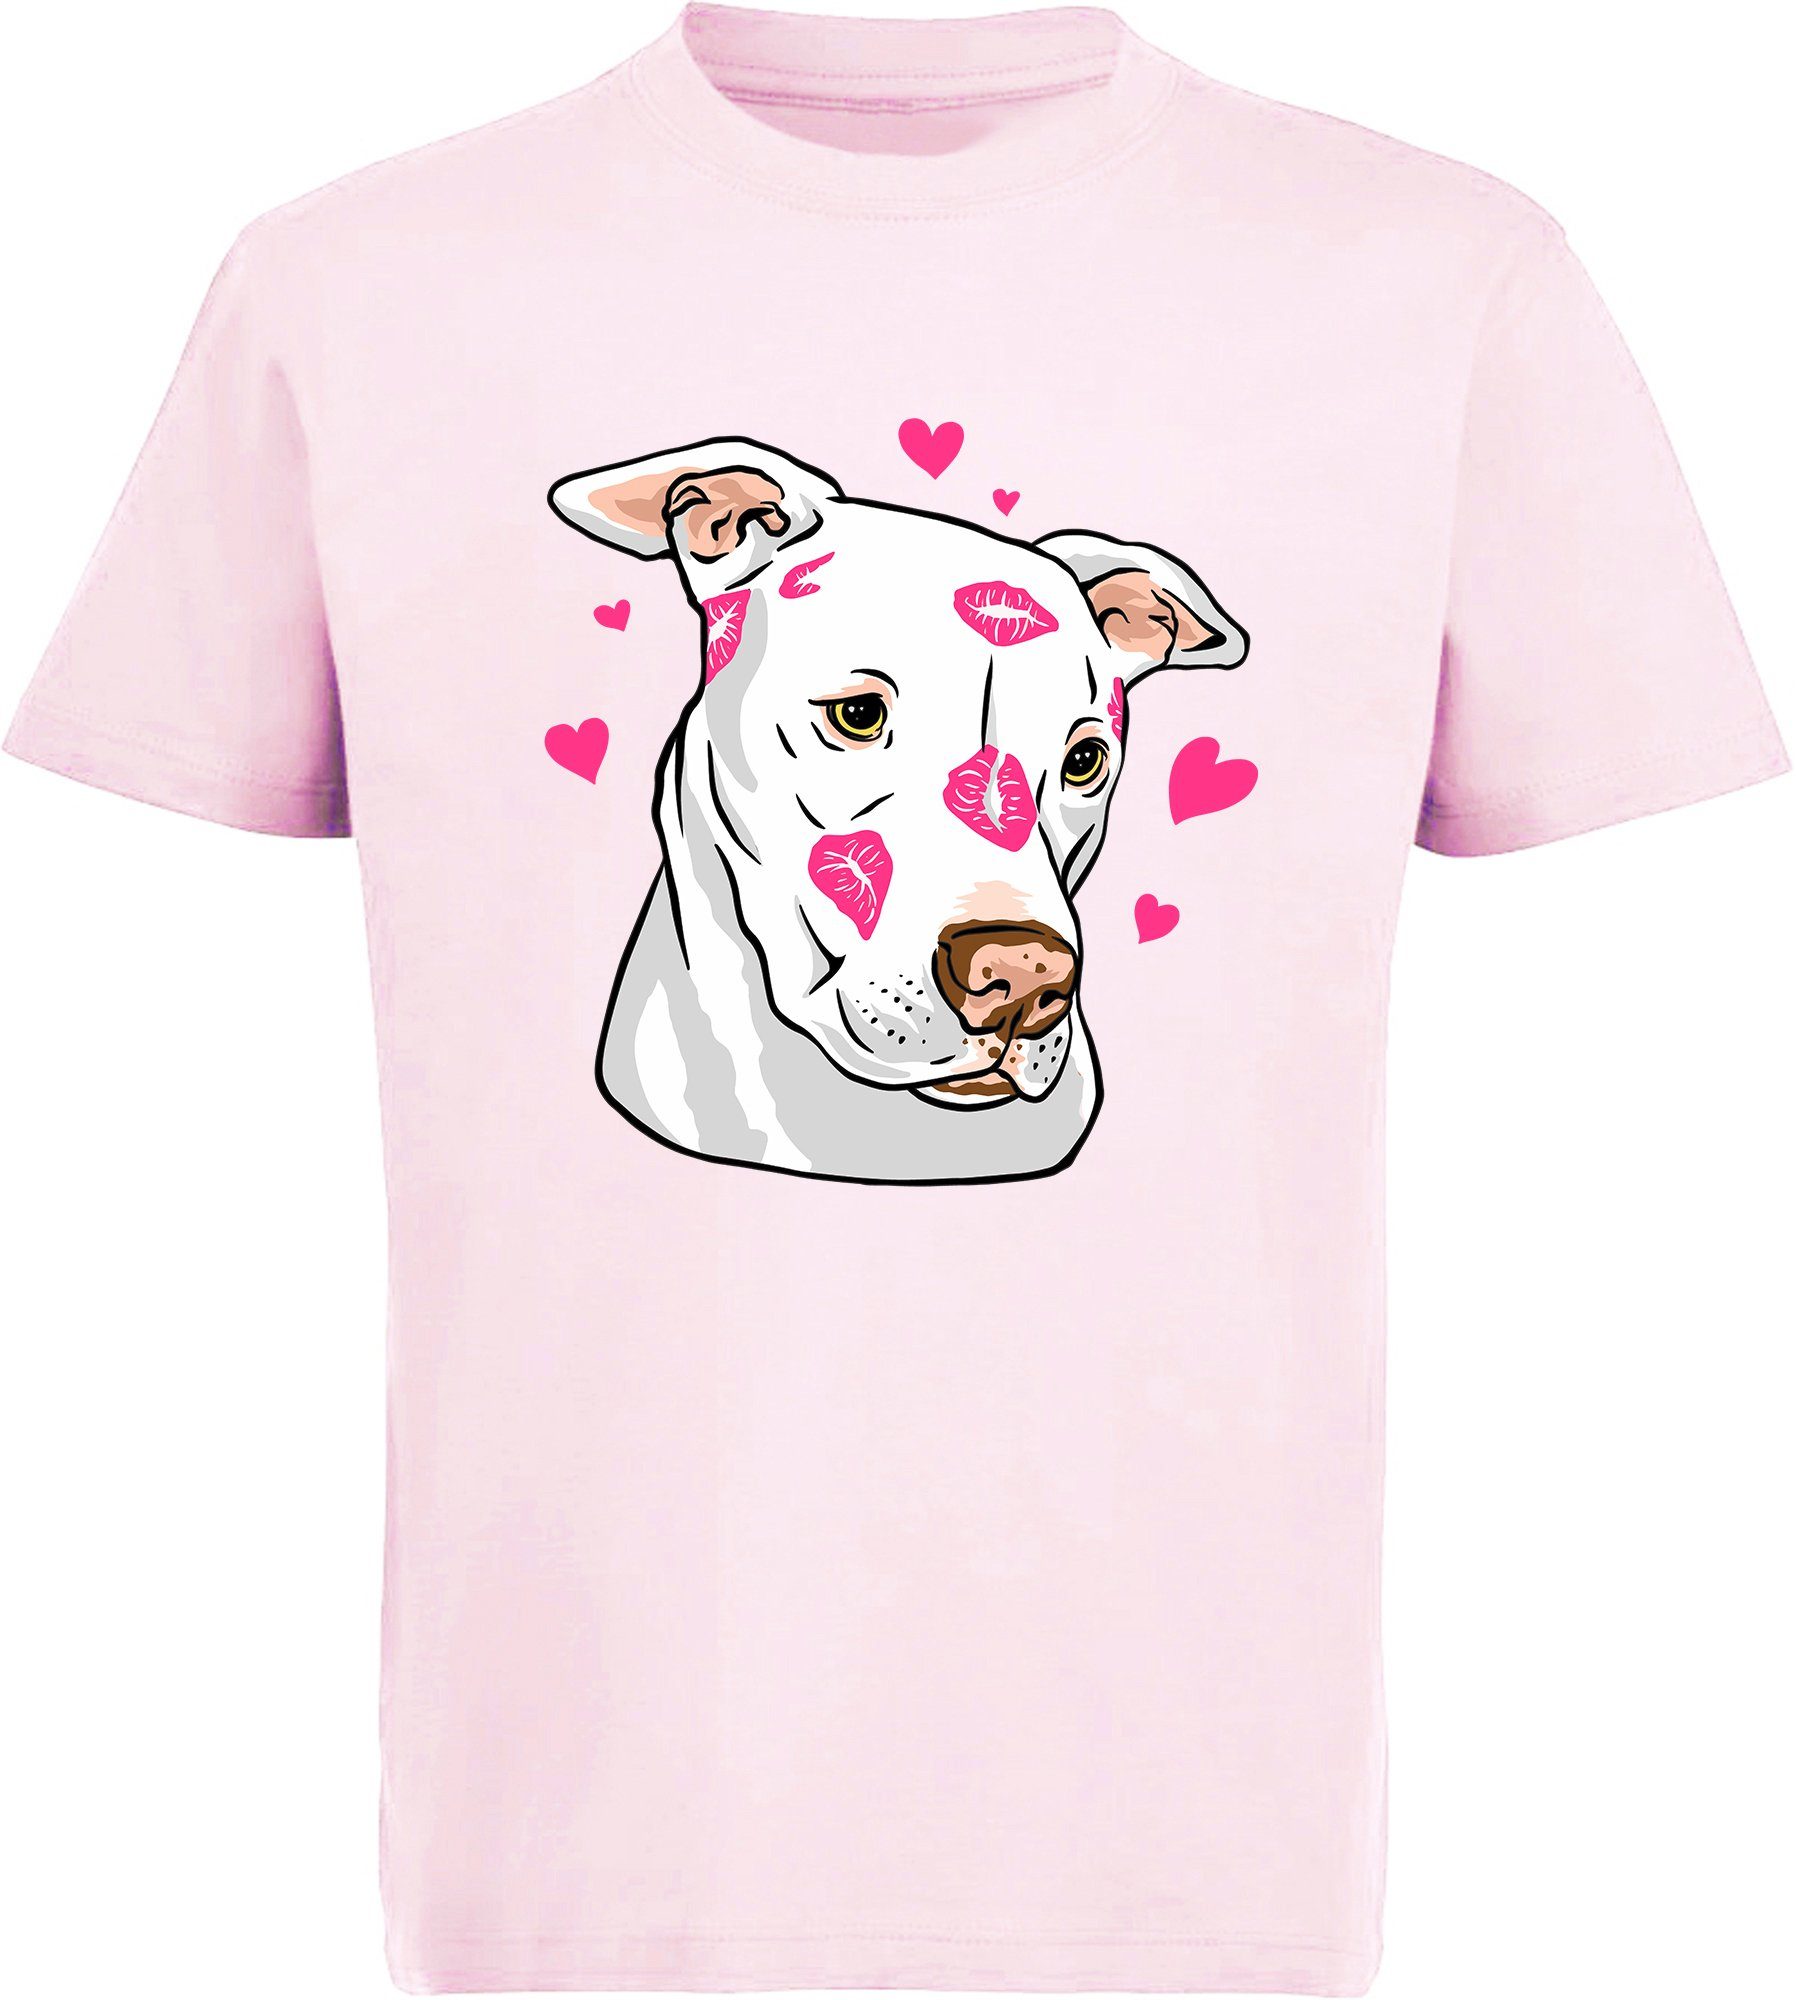 MyDesign24 Print-Shirt bedrucktes Kinder Hunde T-Shirt - Pitbull mit Herzen Baumwollshirt mit Aufdruck, i229 rosa